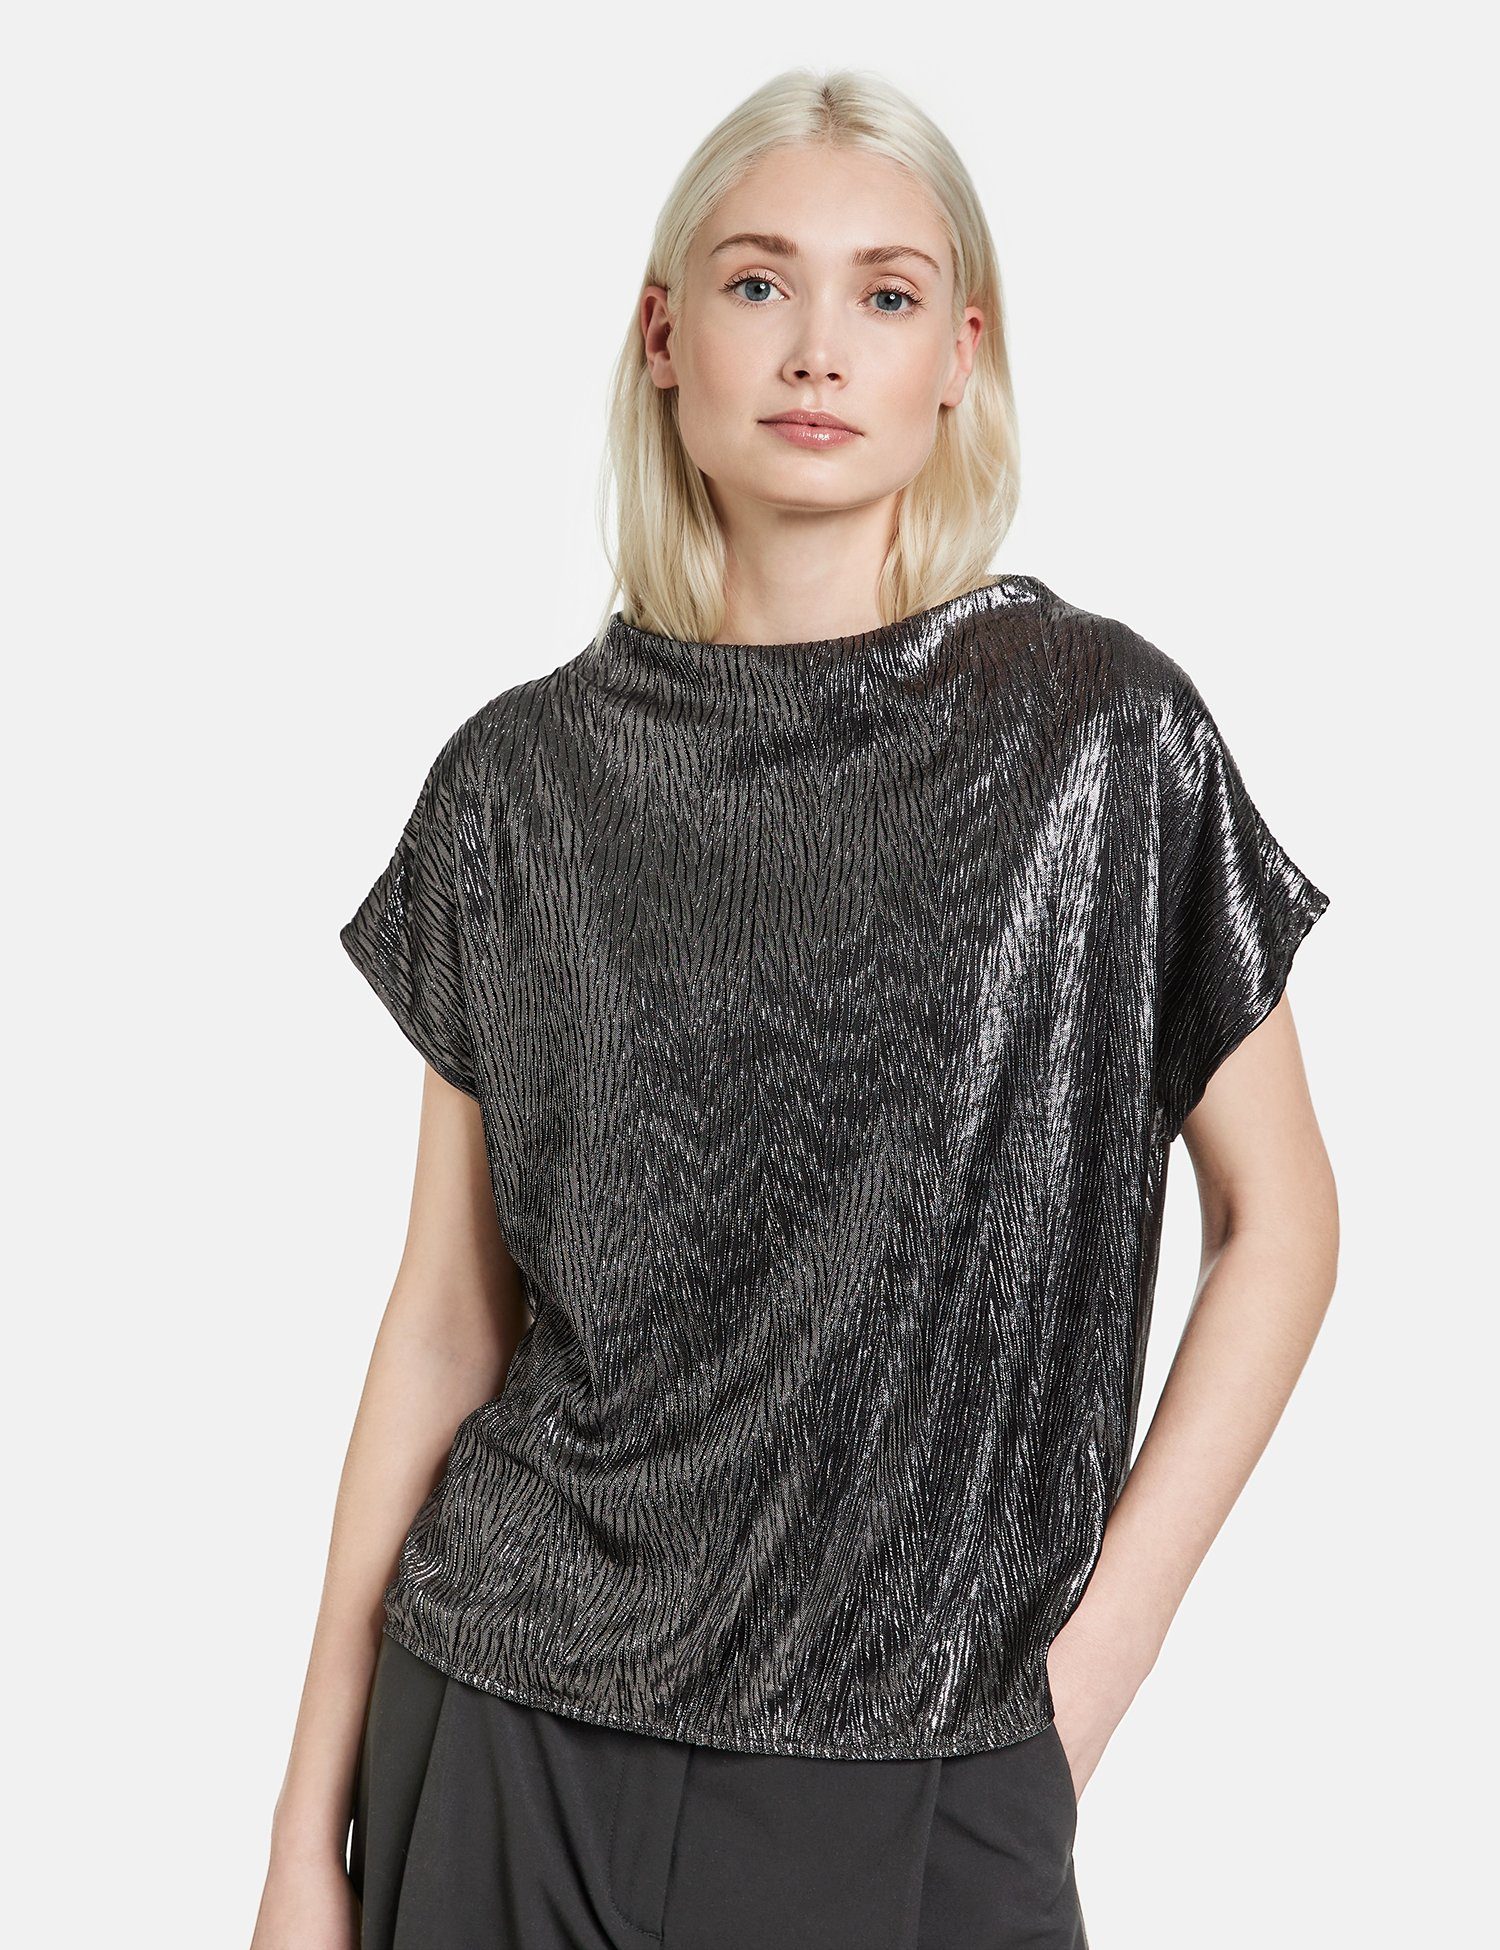 Taifun Kurzarmshirt Glam-Shirt aus glanzvoller Struktur-Qualität Grau